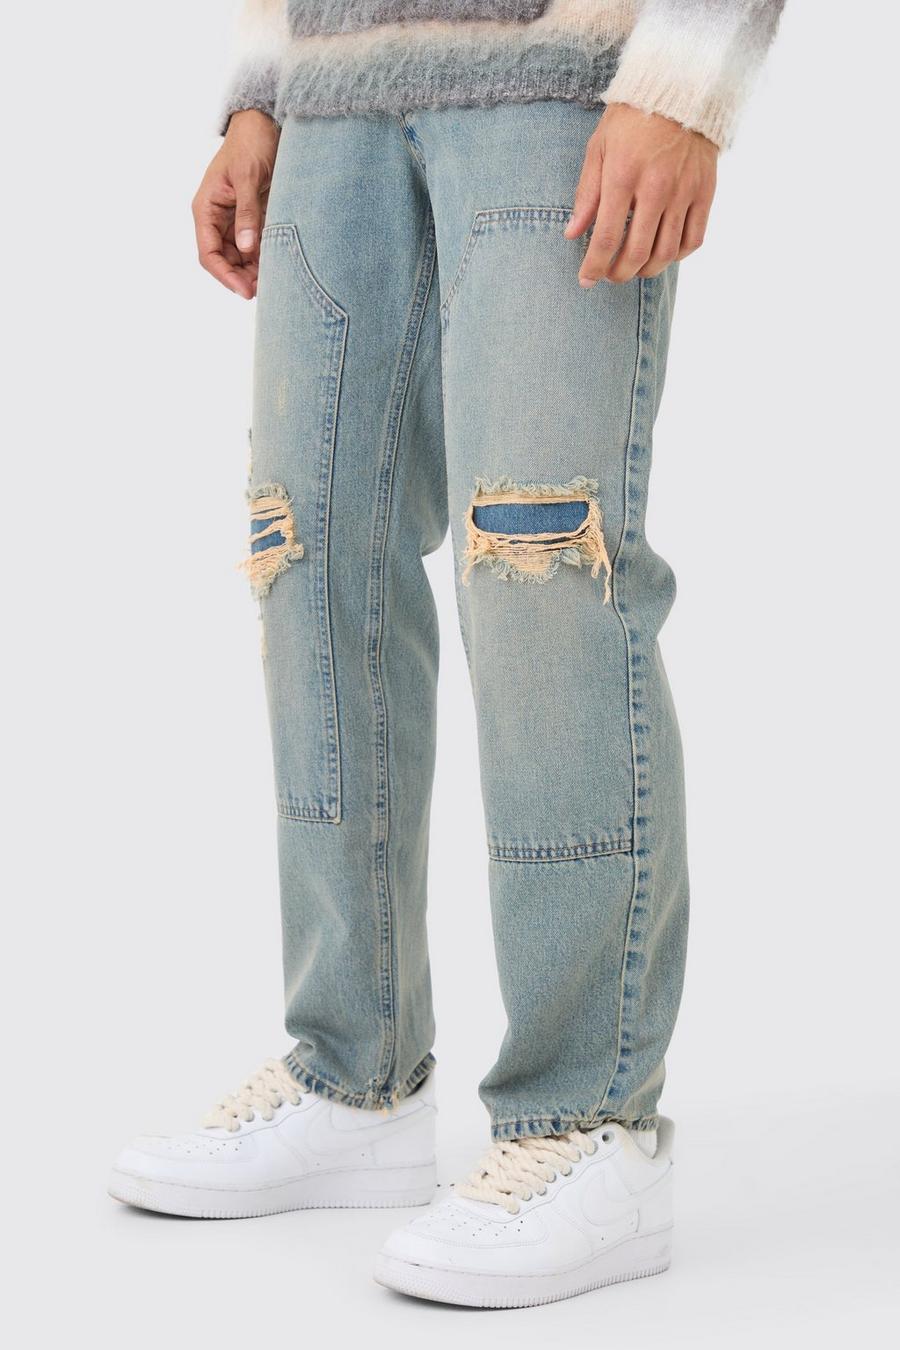 Jeans rilassati in denim rigido stile Carpenter con strappi in blu vintage, Vintage blue